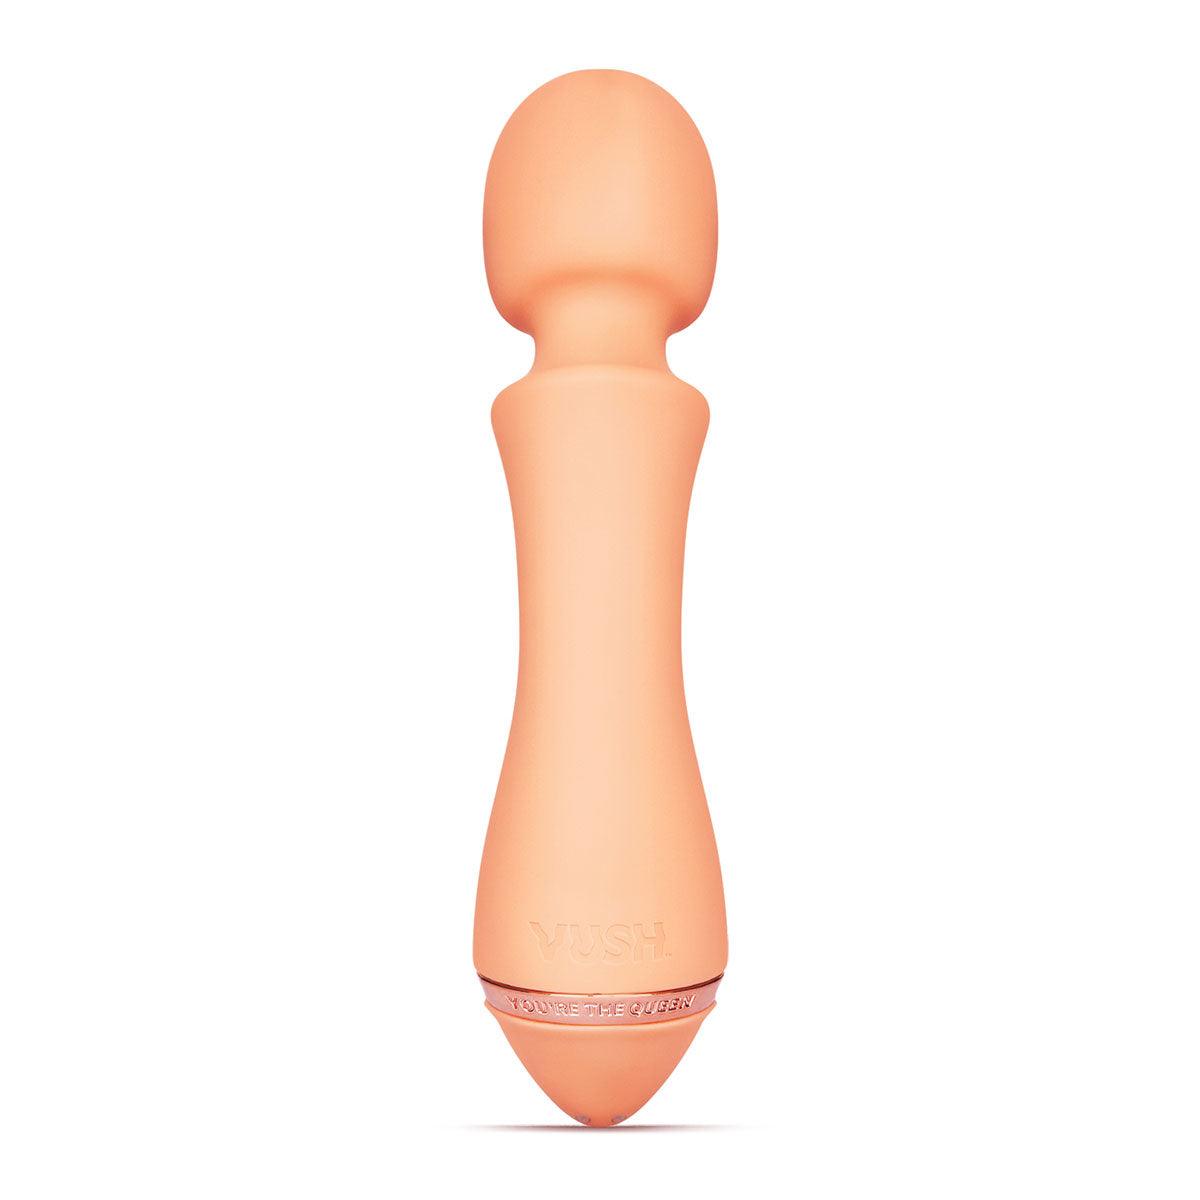 VUSH Majesty 2 Wand Vibrator - Buy At Luxury Toy X - Free 3-Day Shipping